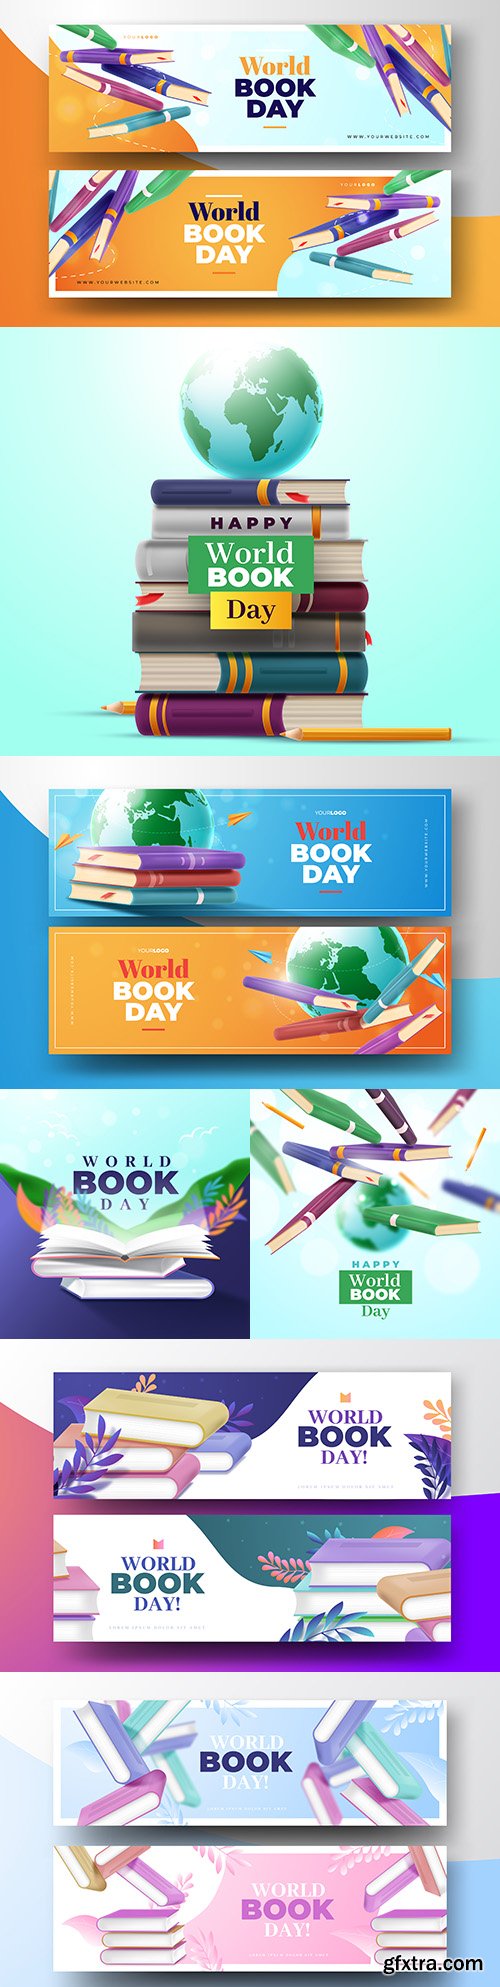 World book day design banter realistic illustrations
